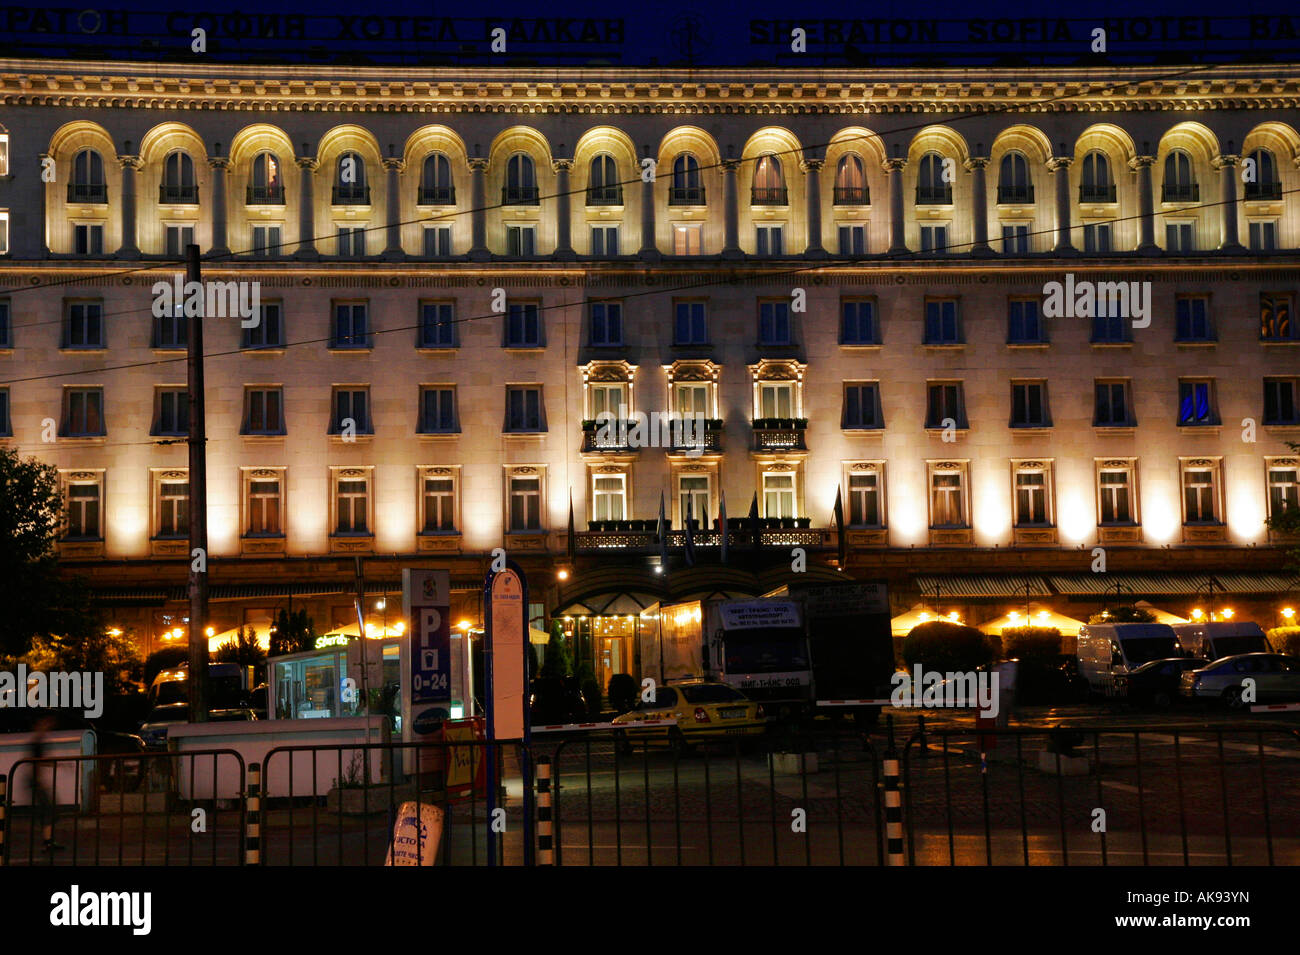 Sheraton Sofia Hotel Balkan / Sofia Stock Photo - Alamy